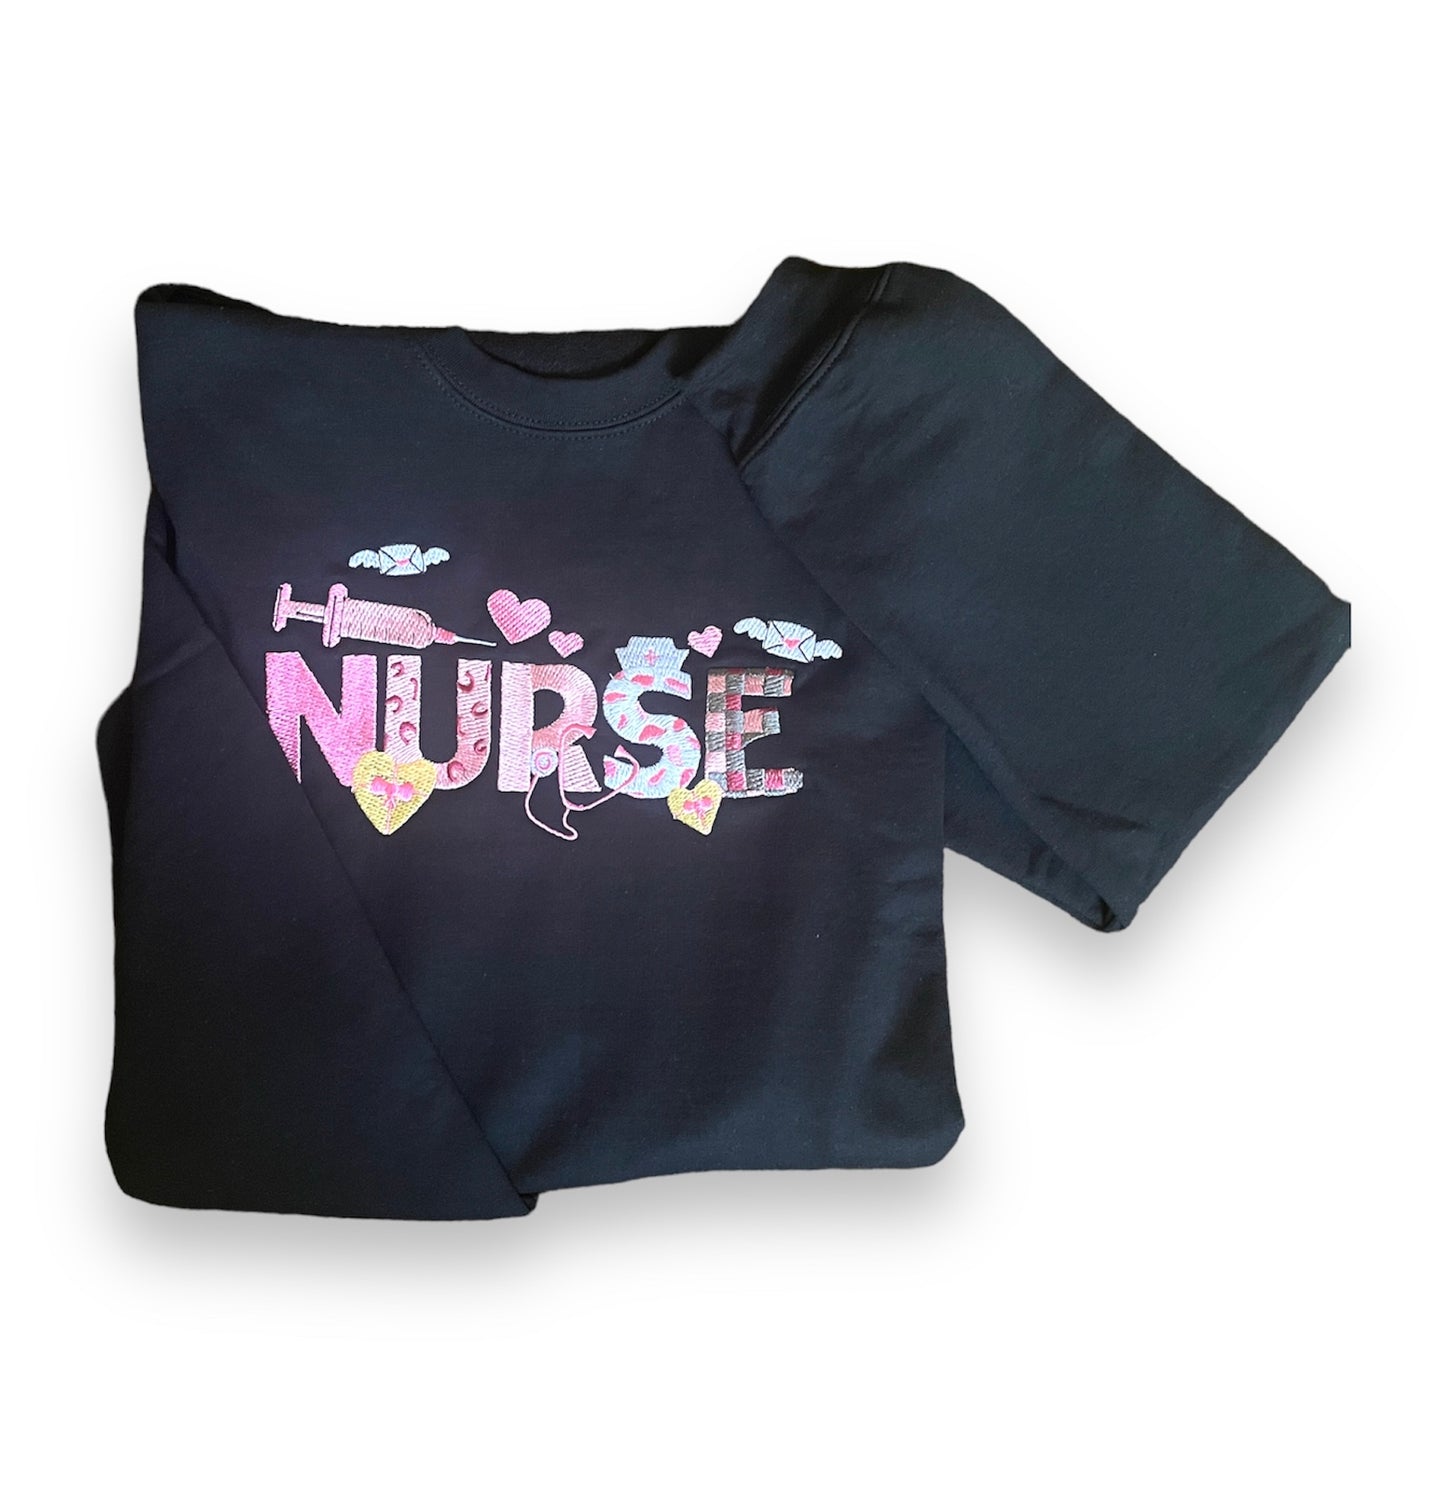 Nurse Life” Embroidered Sweatshirt – Cozy and Stylish Tribute to Nurses